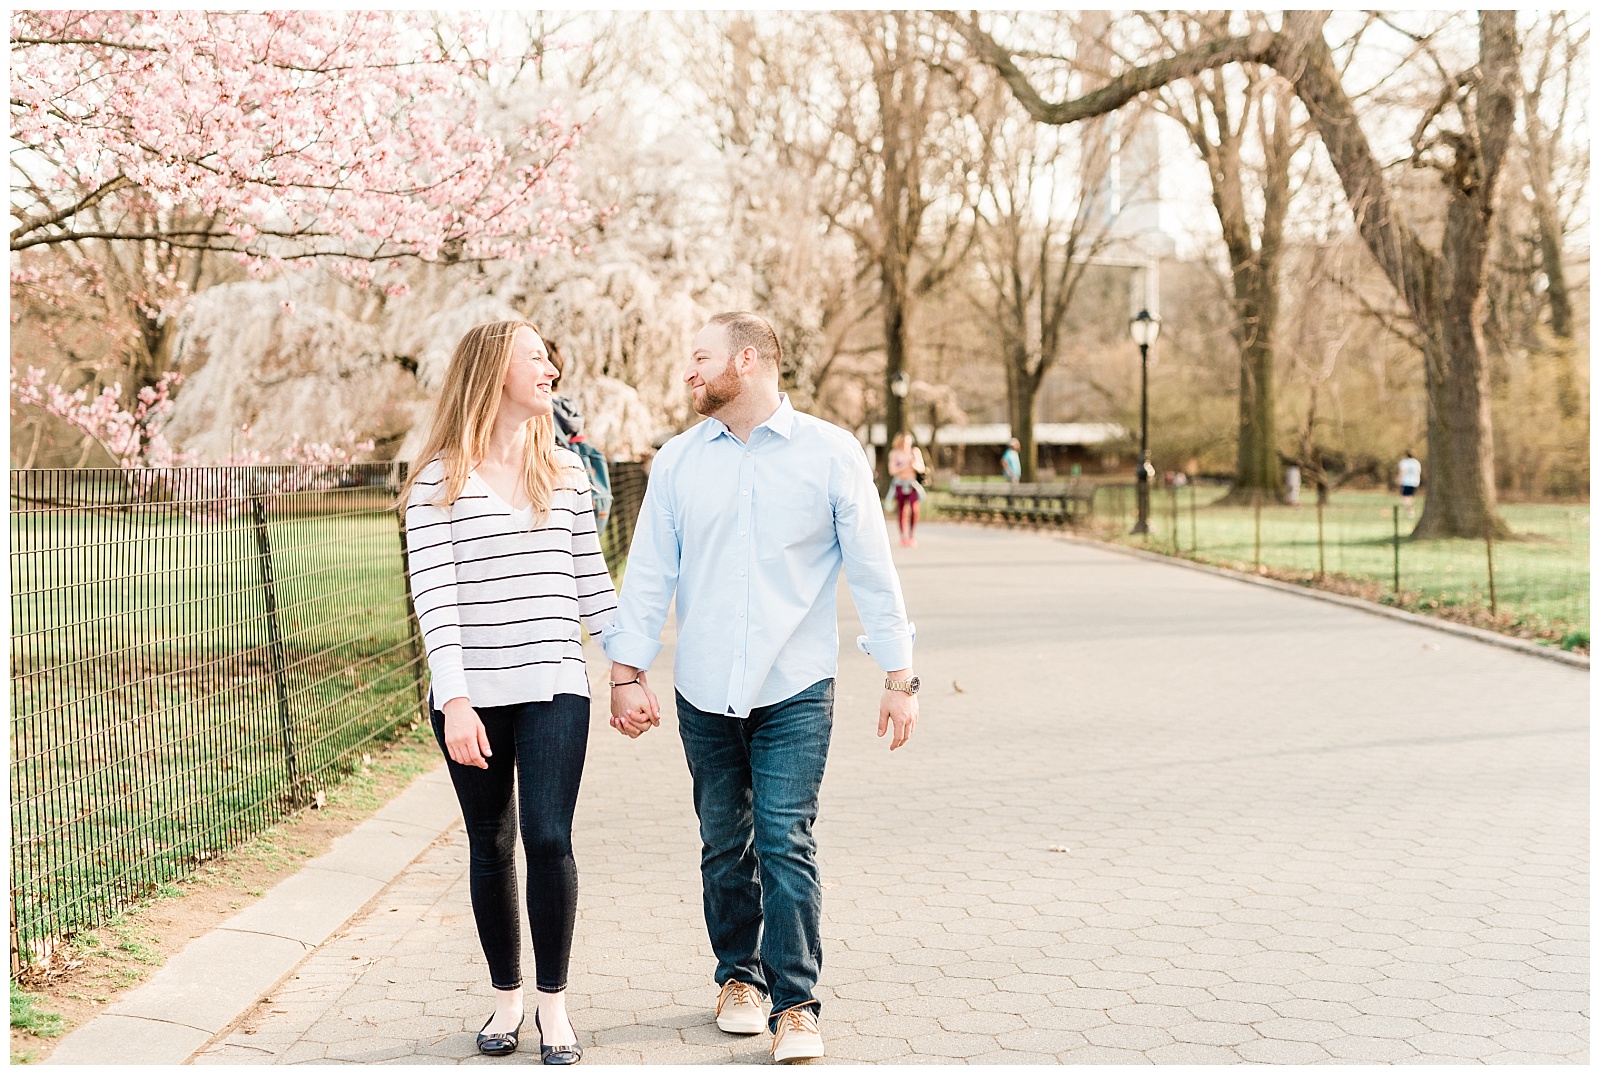 Central Park, NYC engagement session, springtime, wedding photographer, New York, walk